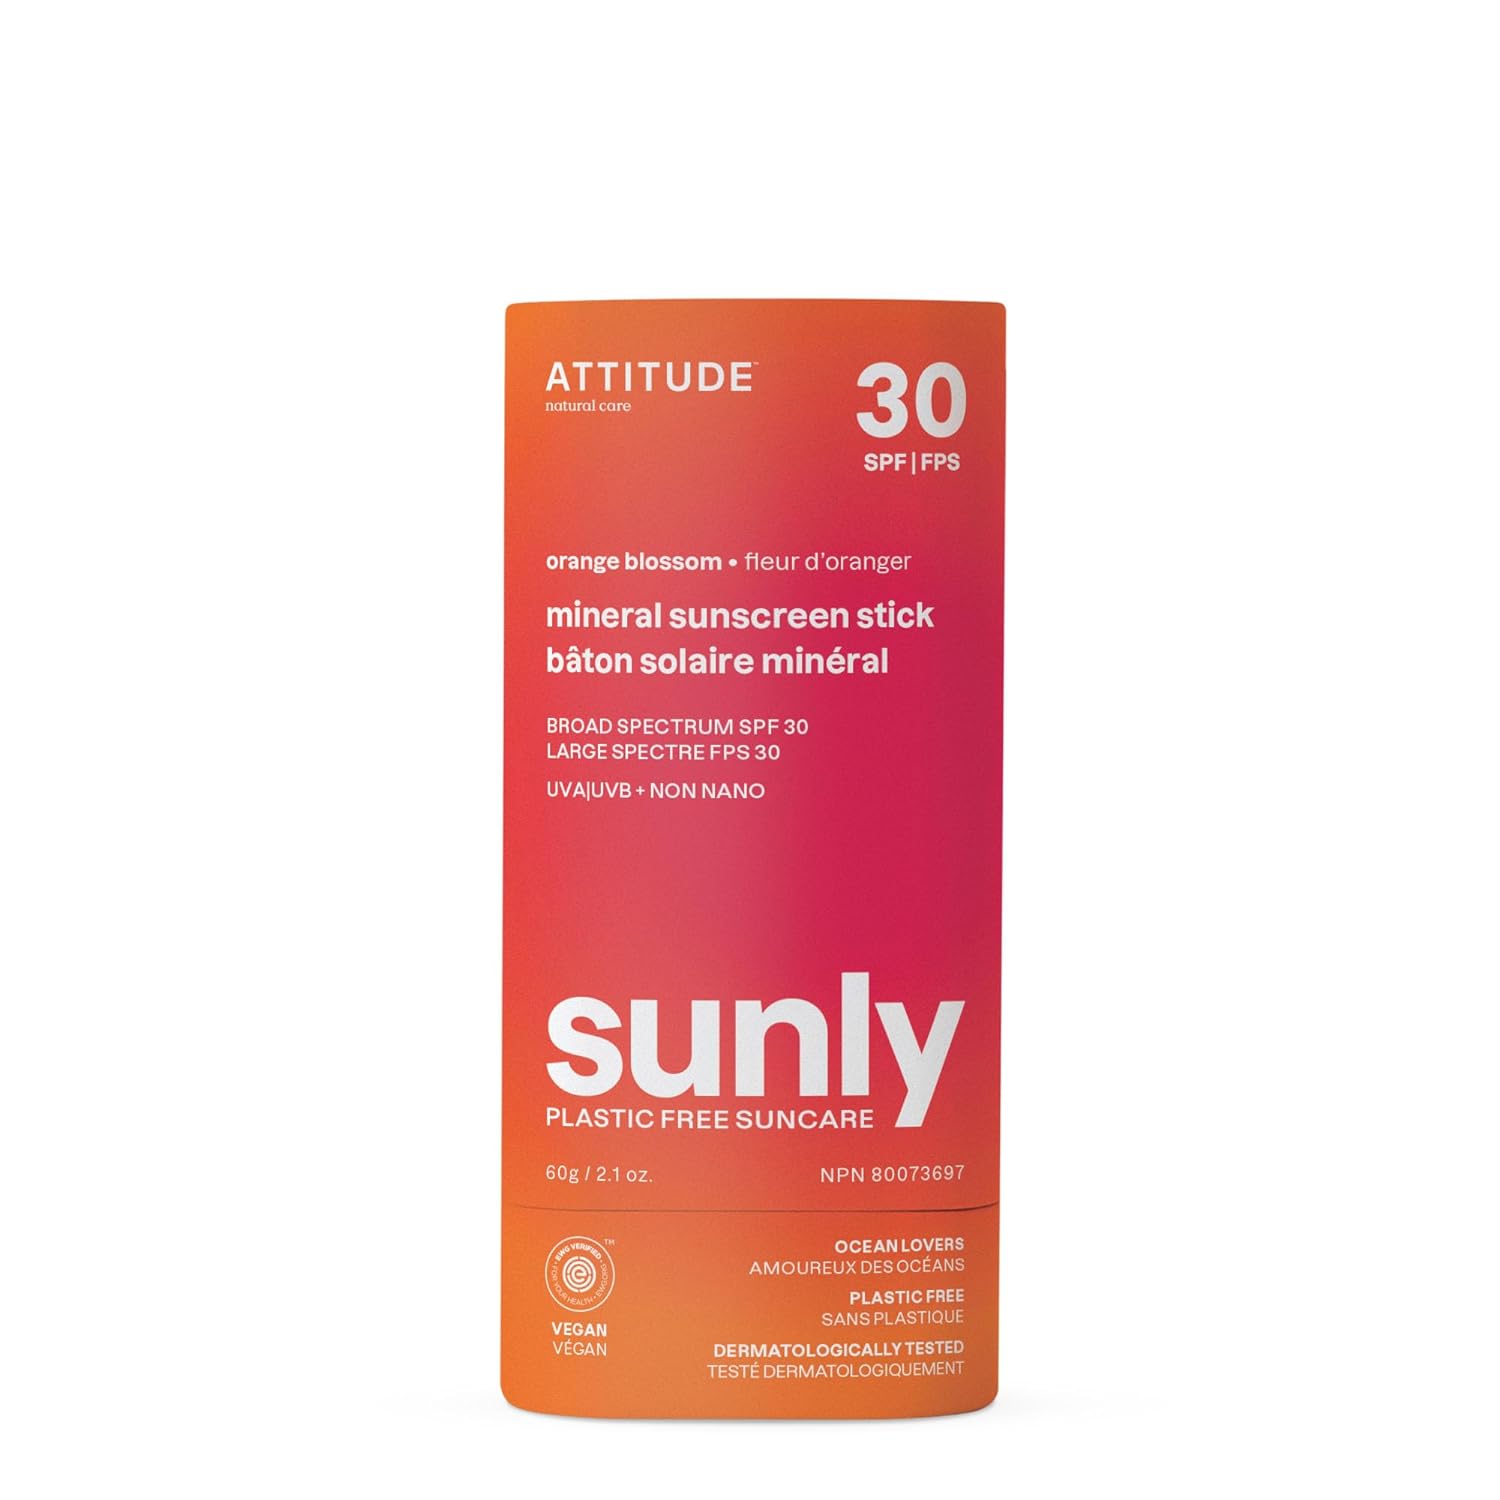 ATTITUDE Mineral Sunscreen Stick with Zinc Oxide, SPF 30, EWG Verified, Plastic-Free, Broad Spectrum UVA/UVB Protection, Dermatologically Tested, Vegan, Orange Blossom, 2.1 Ounces